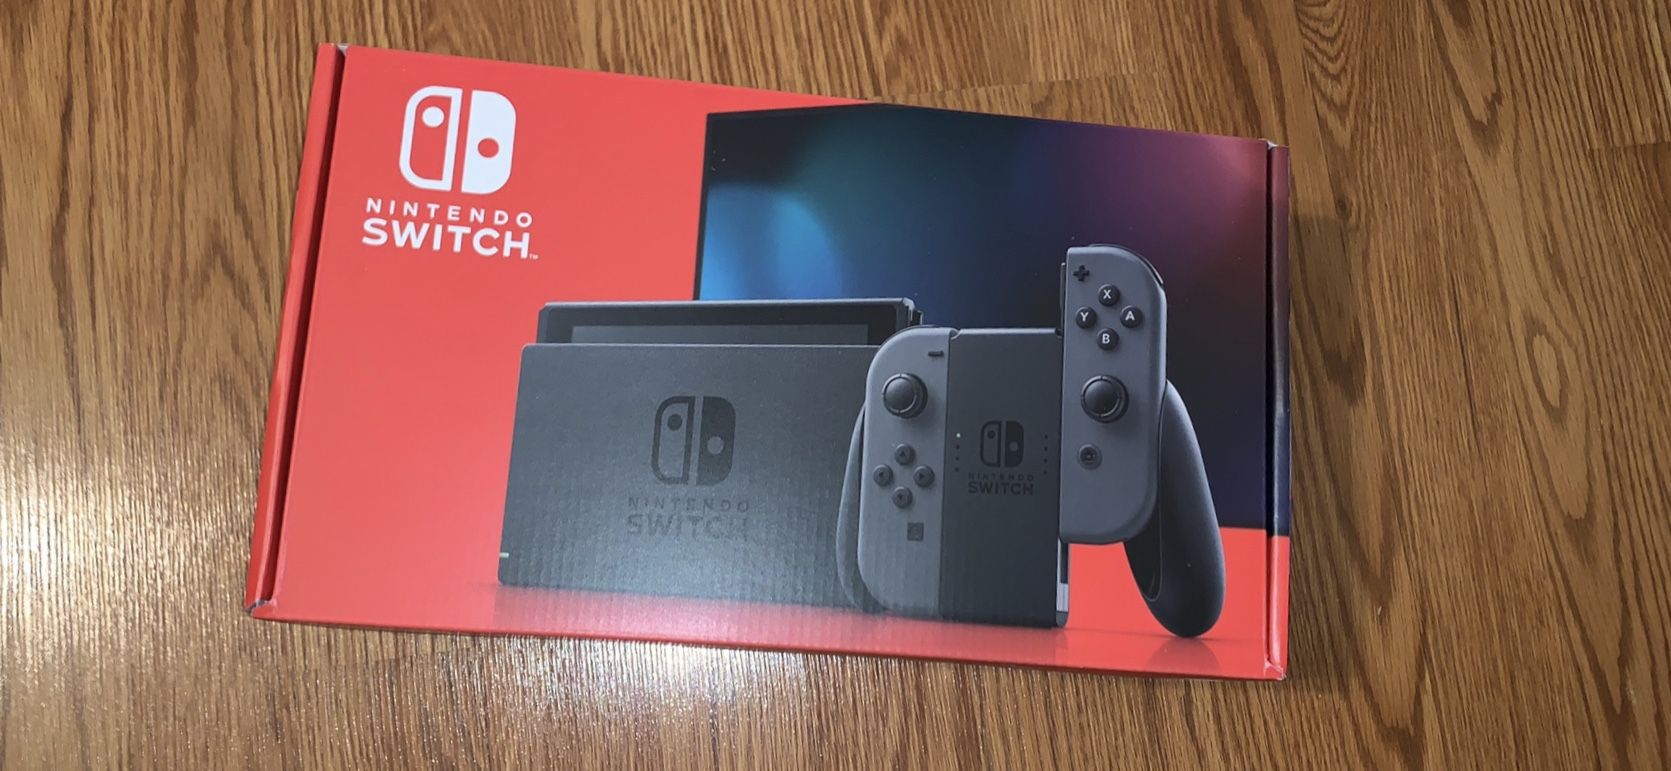 New Nintendo switch grey in hand